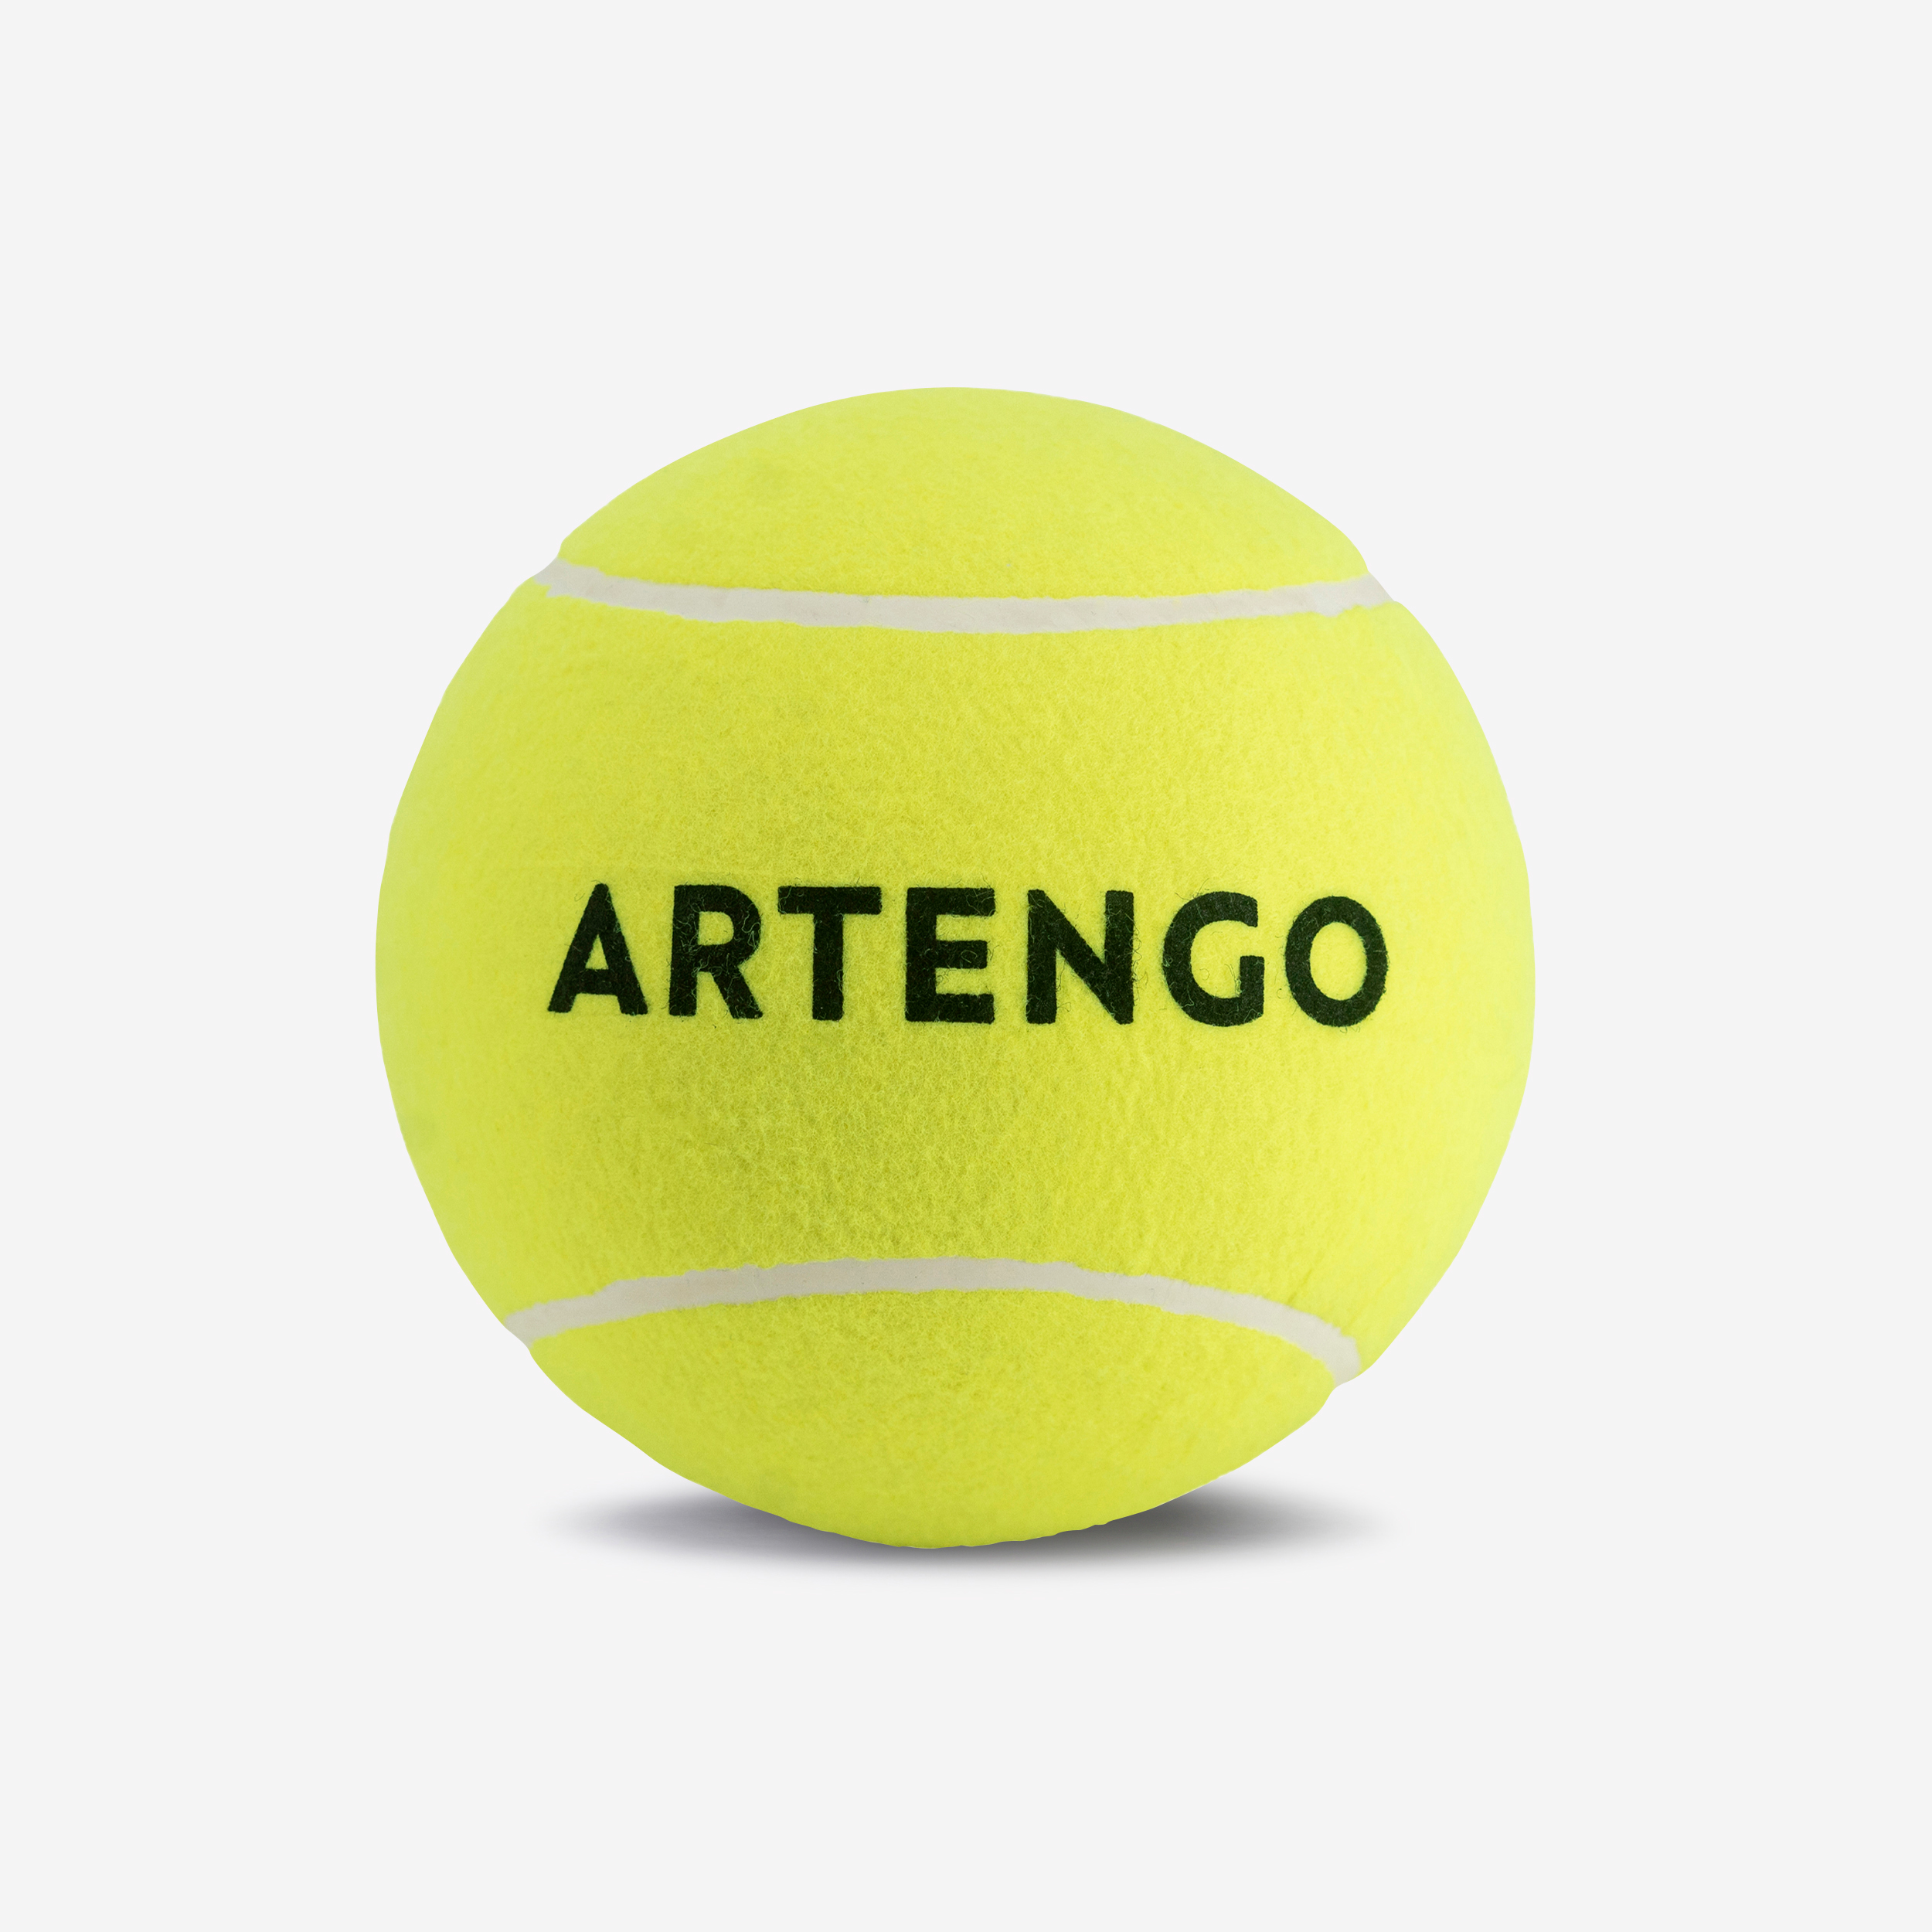 Balle de tennis personnalisable